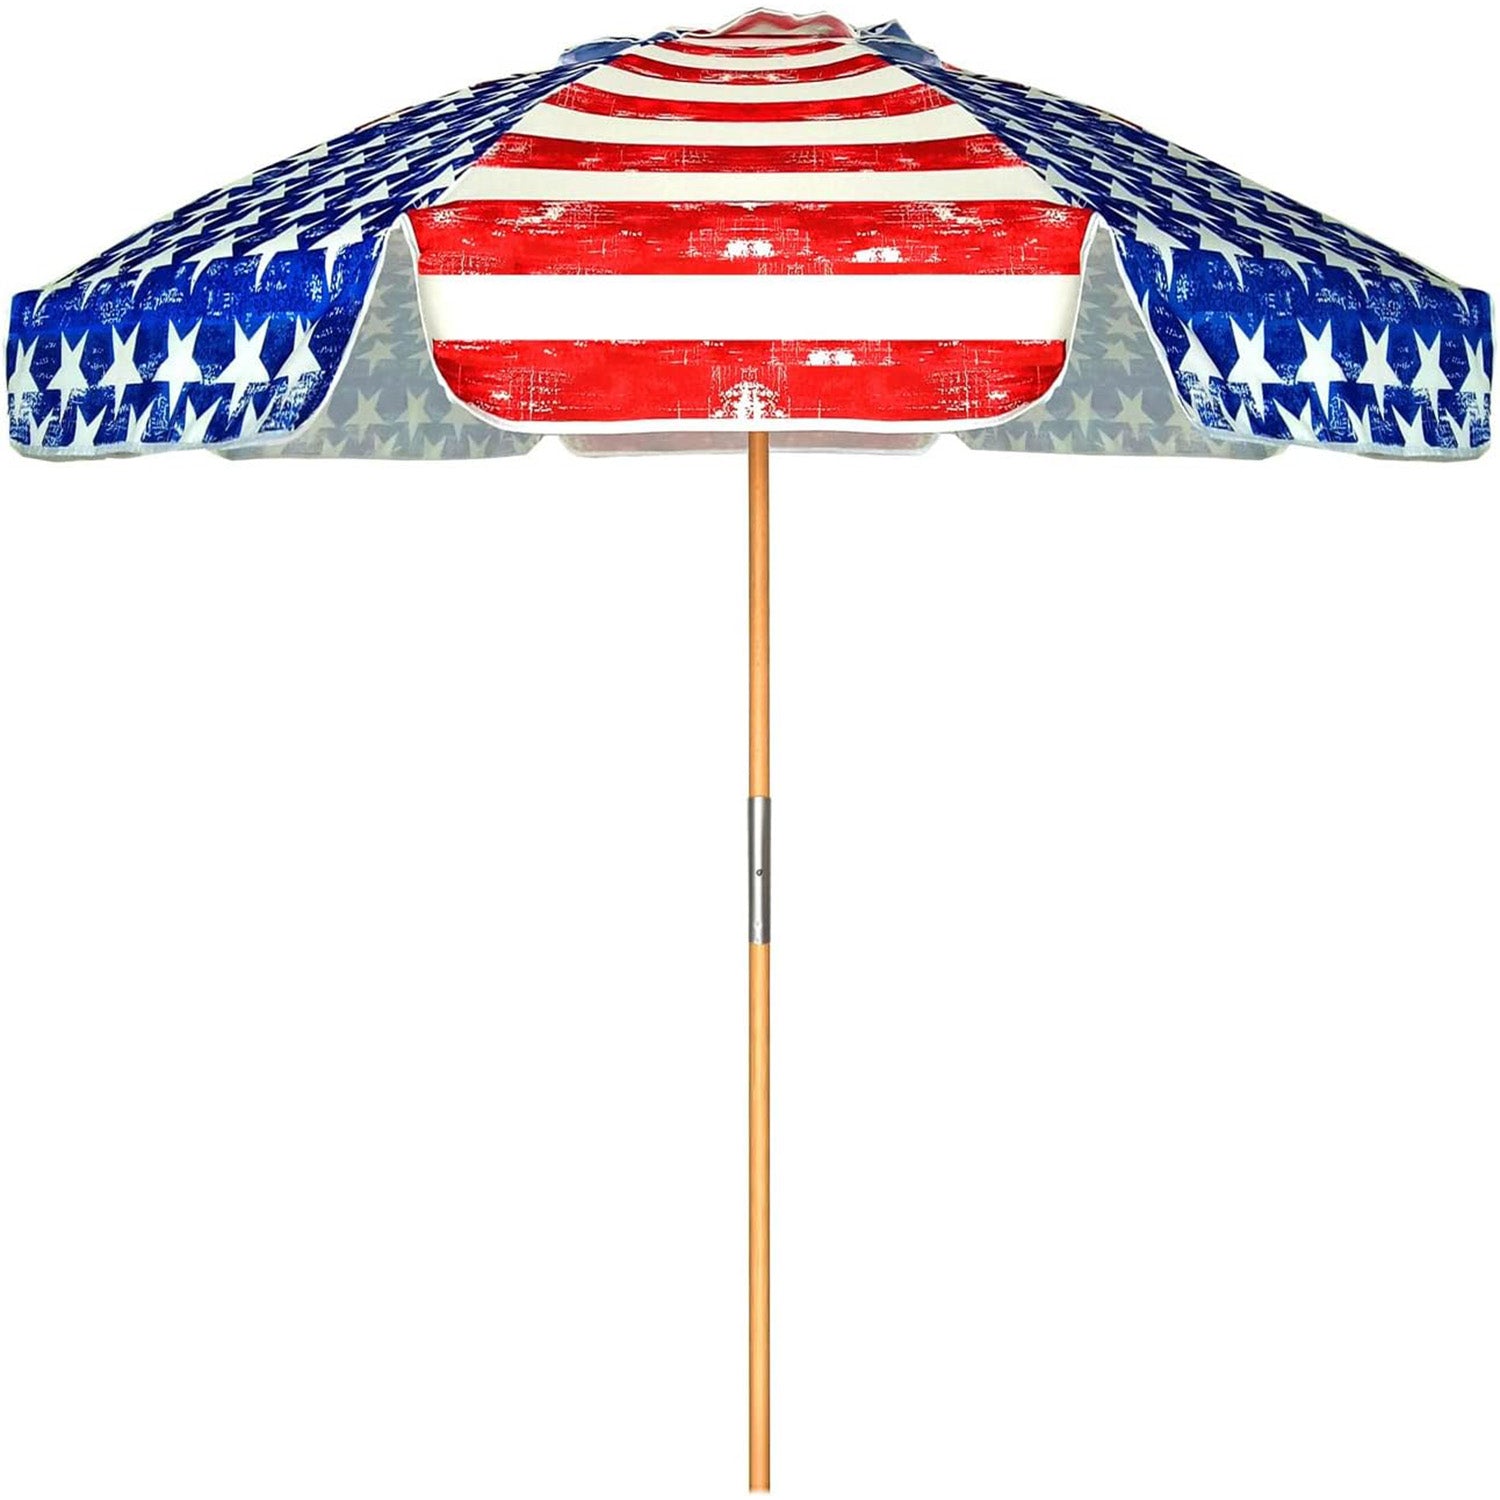 AMMSUN 7.5ft Commercial Grade Beach Umbrella Blue Red